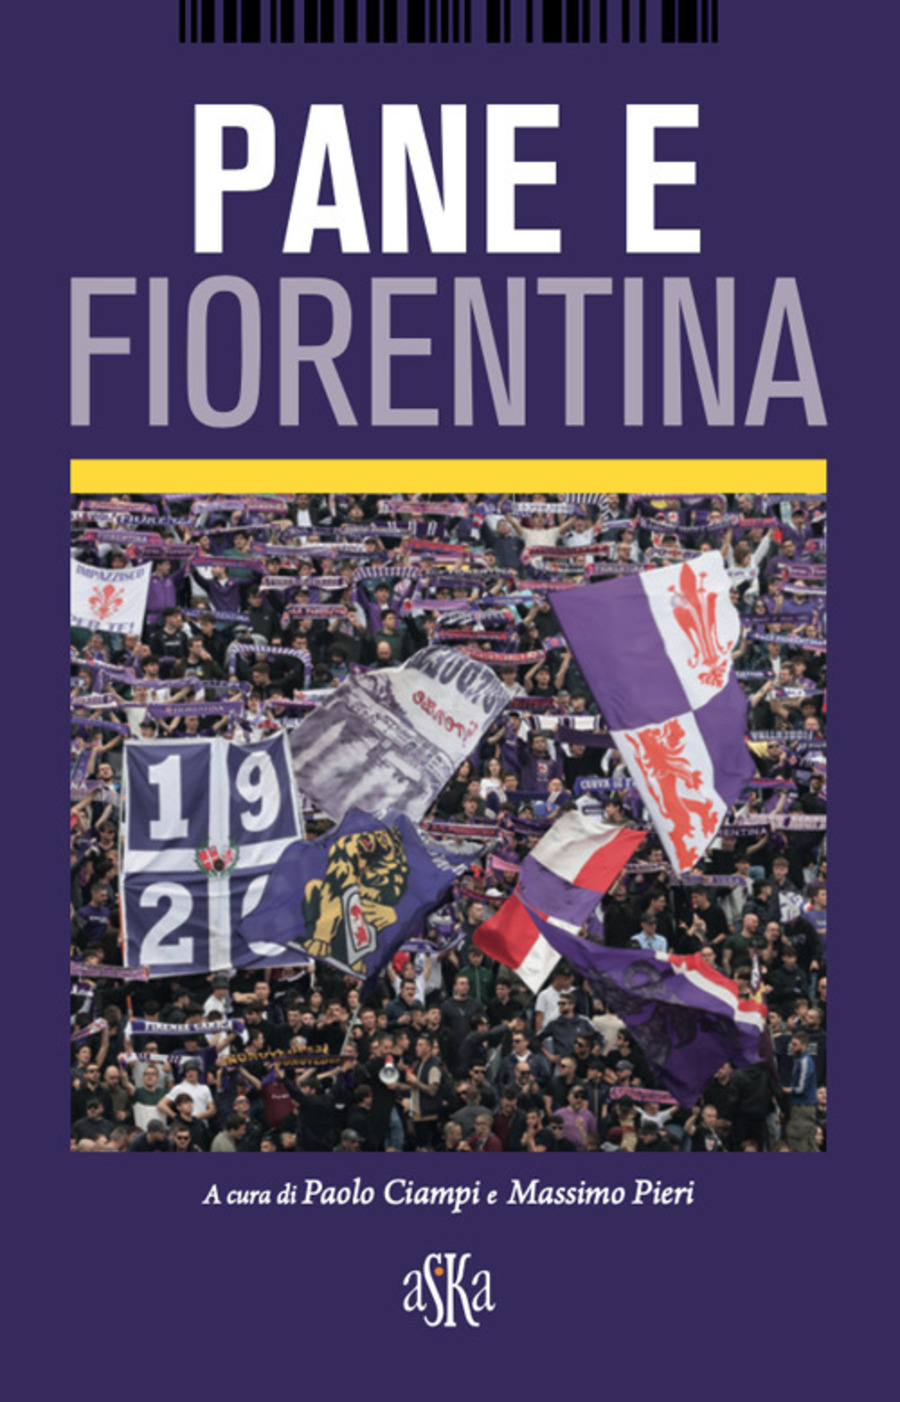 Pane e Fiorentina